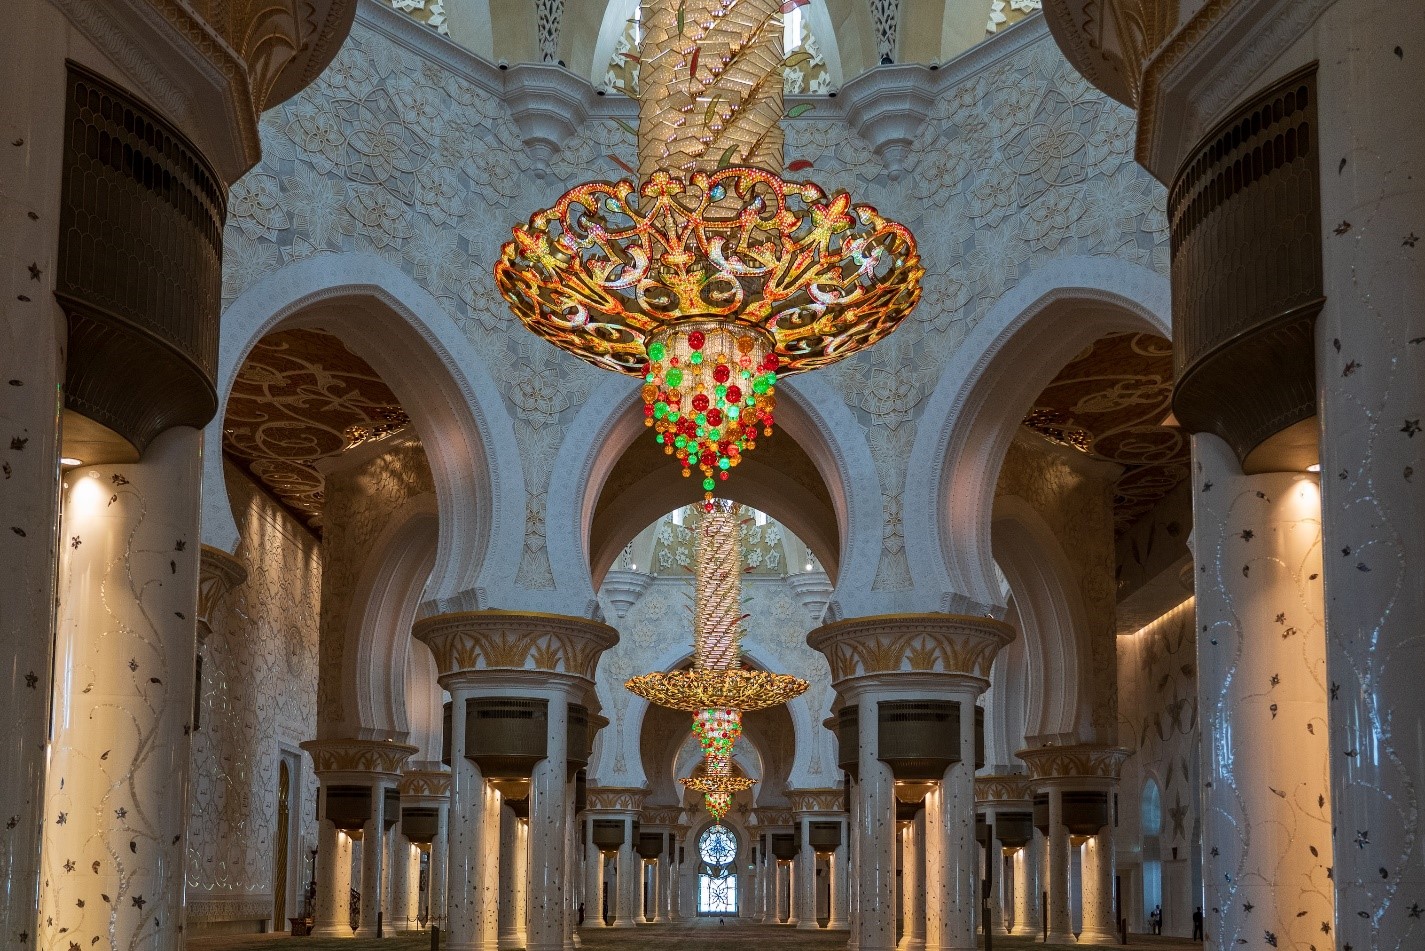 Islamic style in interior design – Islamic Inspired Interiors